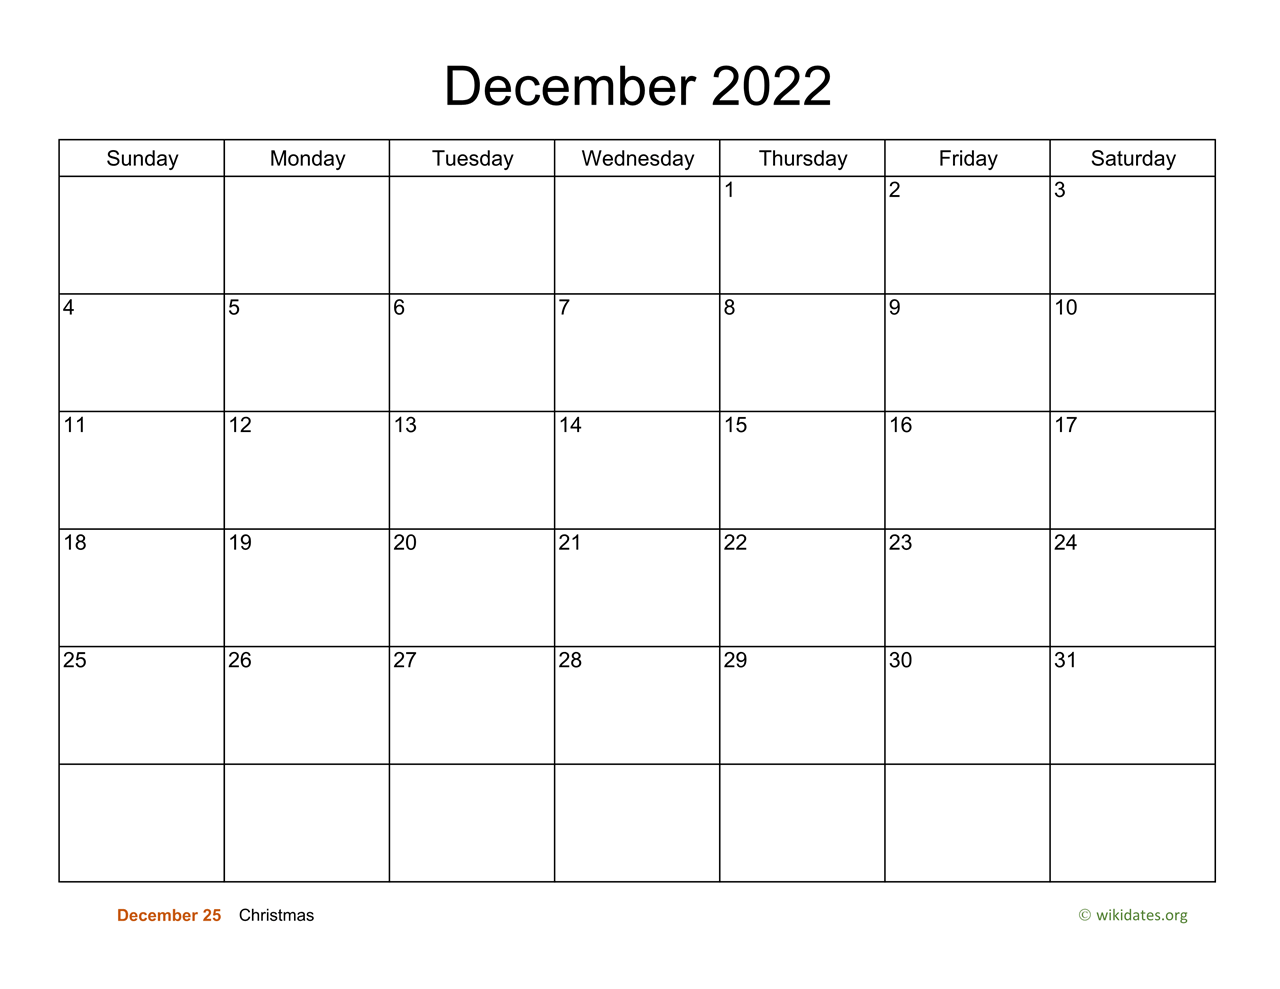 December 2022 Calendar Template Basic Calendar For December 2022 | Wikidates.org